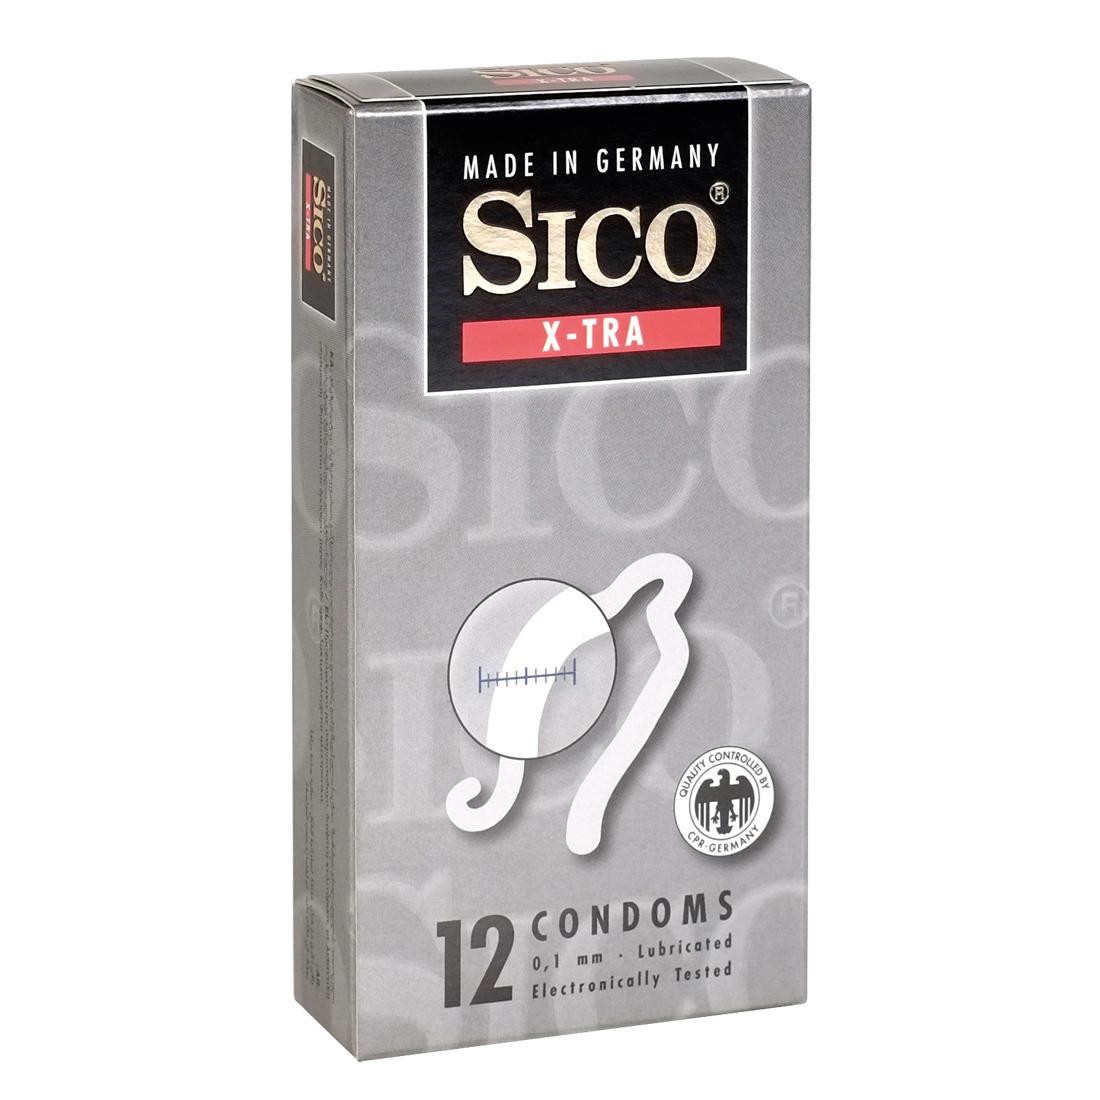  SICO  X-tra  12er  -  Kondome 